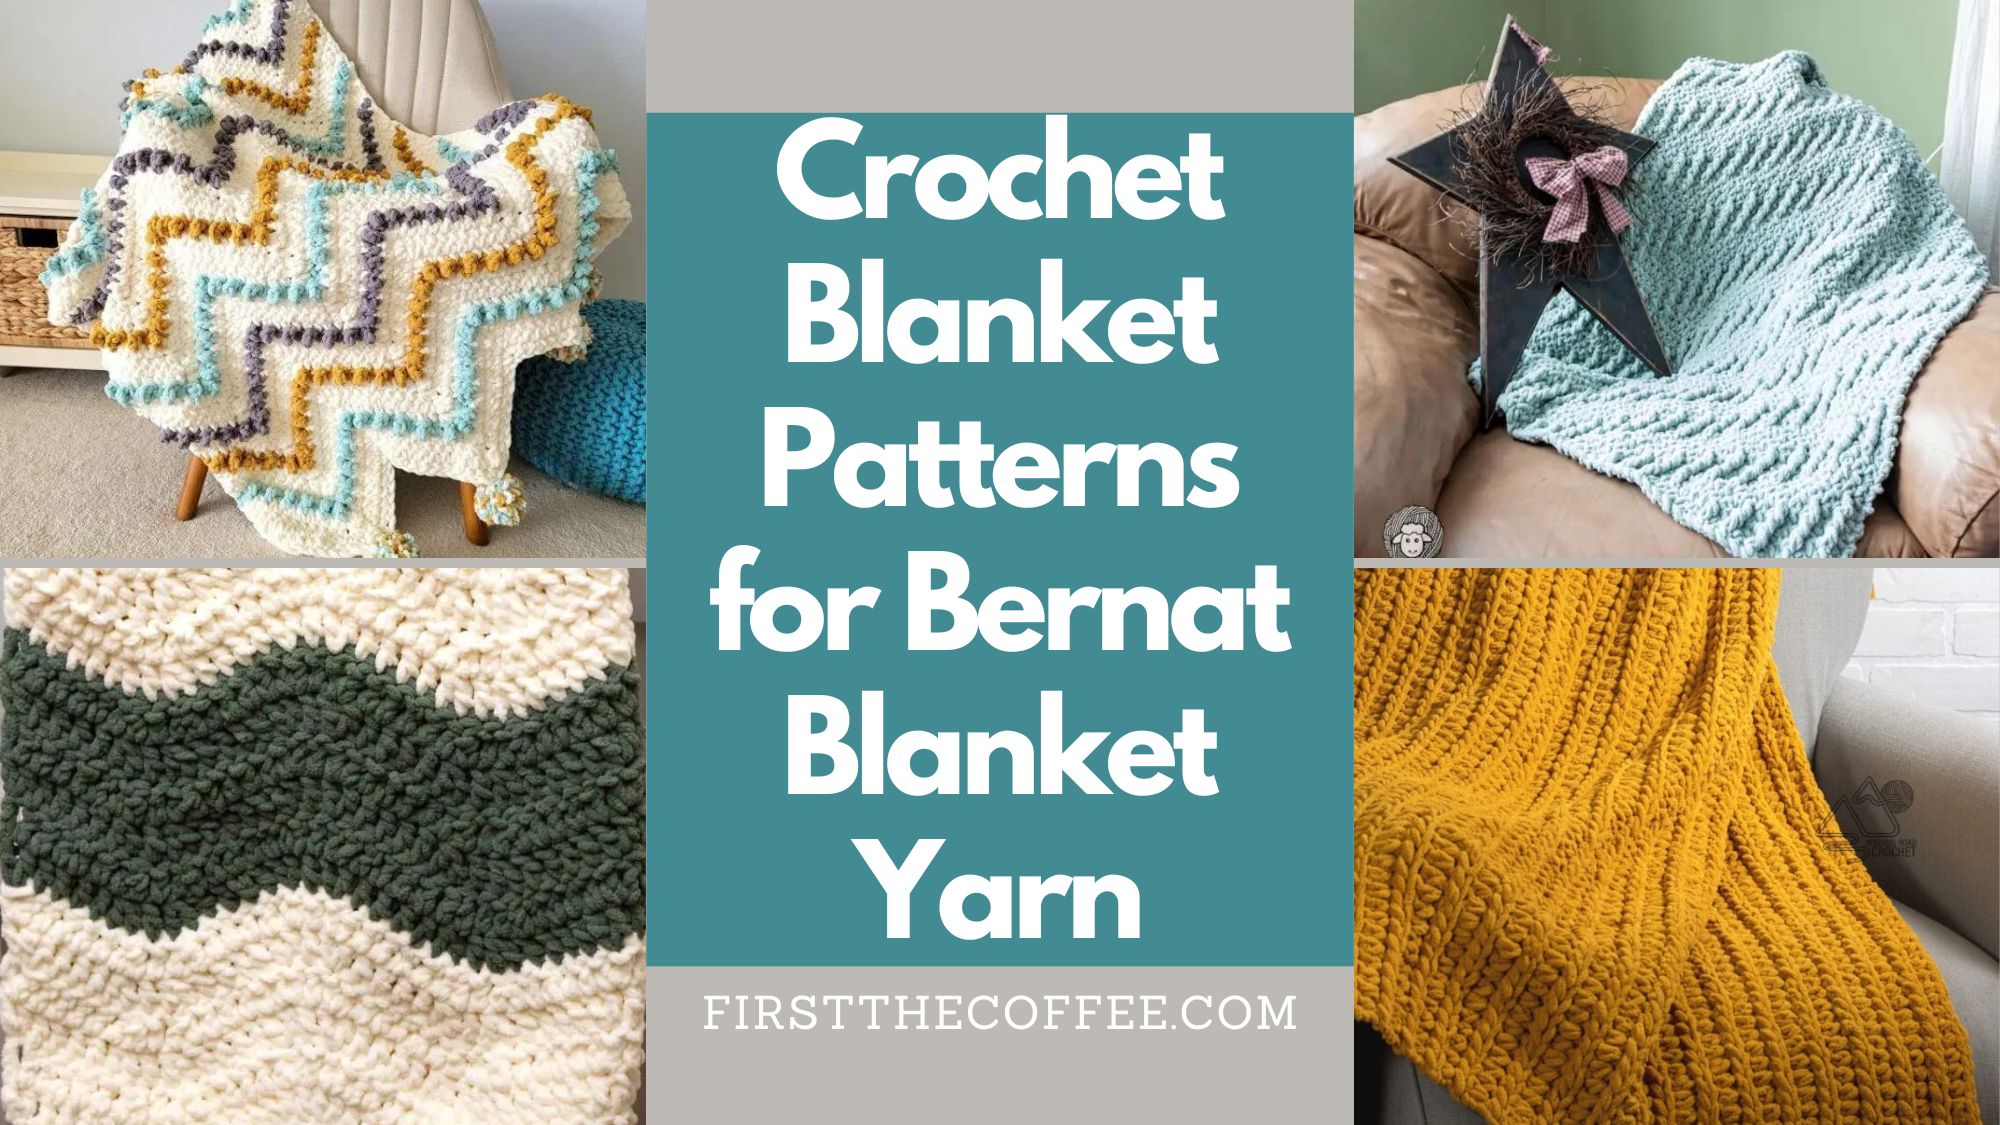 Crochet Blanket Sizes Chart - Carroway Crochet